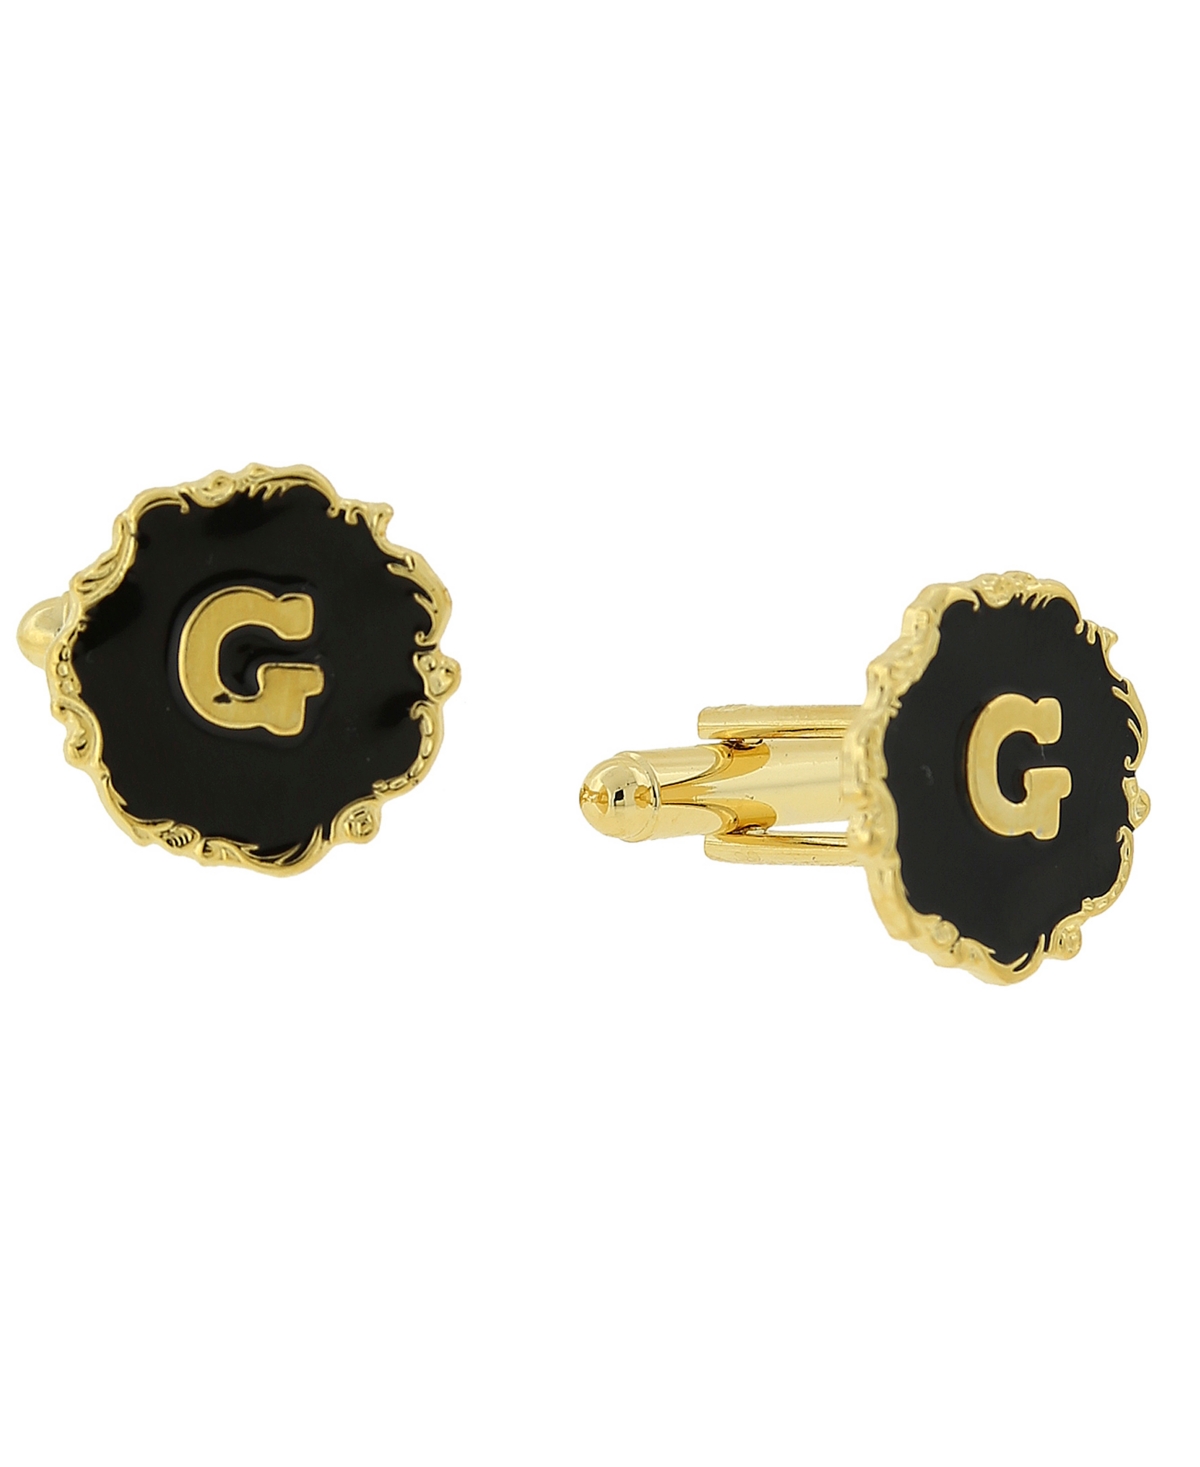 Jewelry 14K Gold-Plated Enamel Initial G Cufflinks - Black